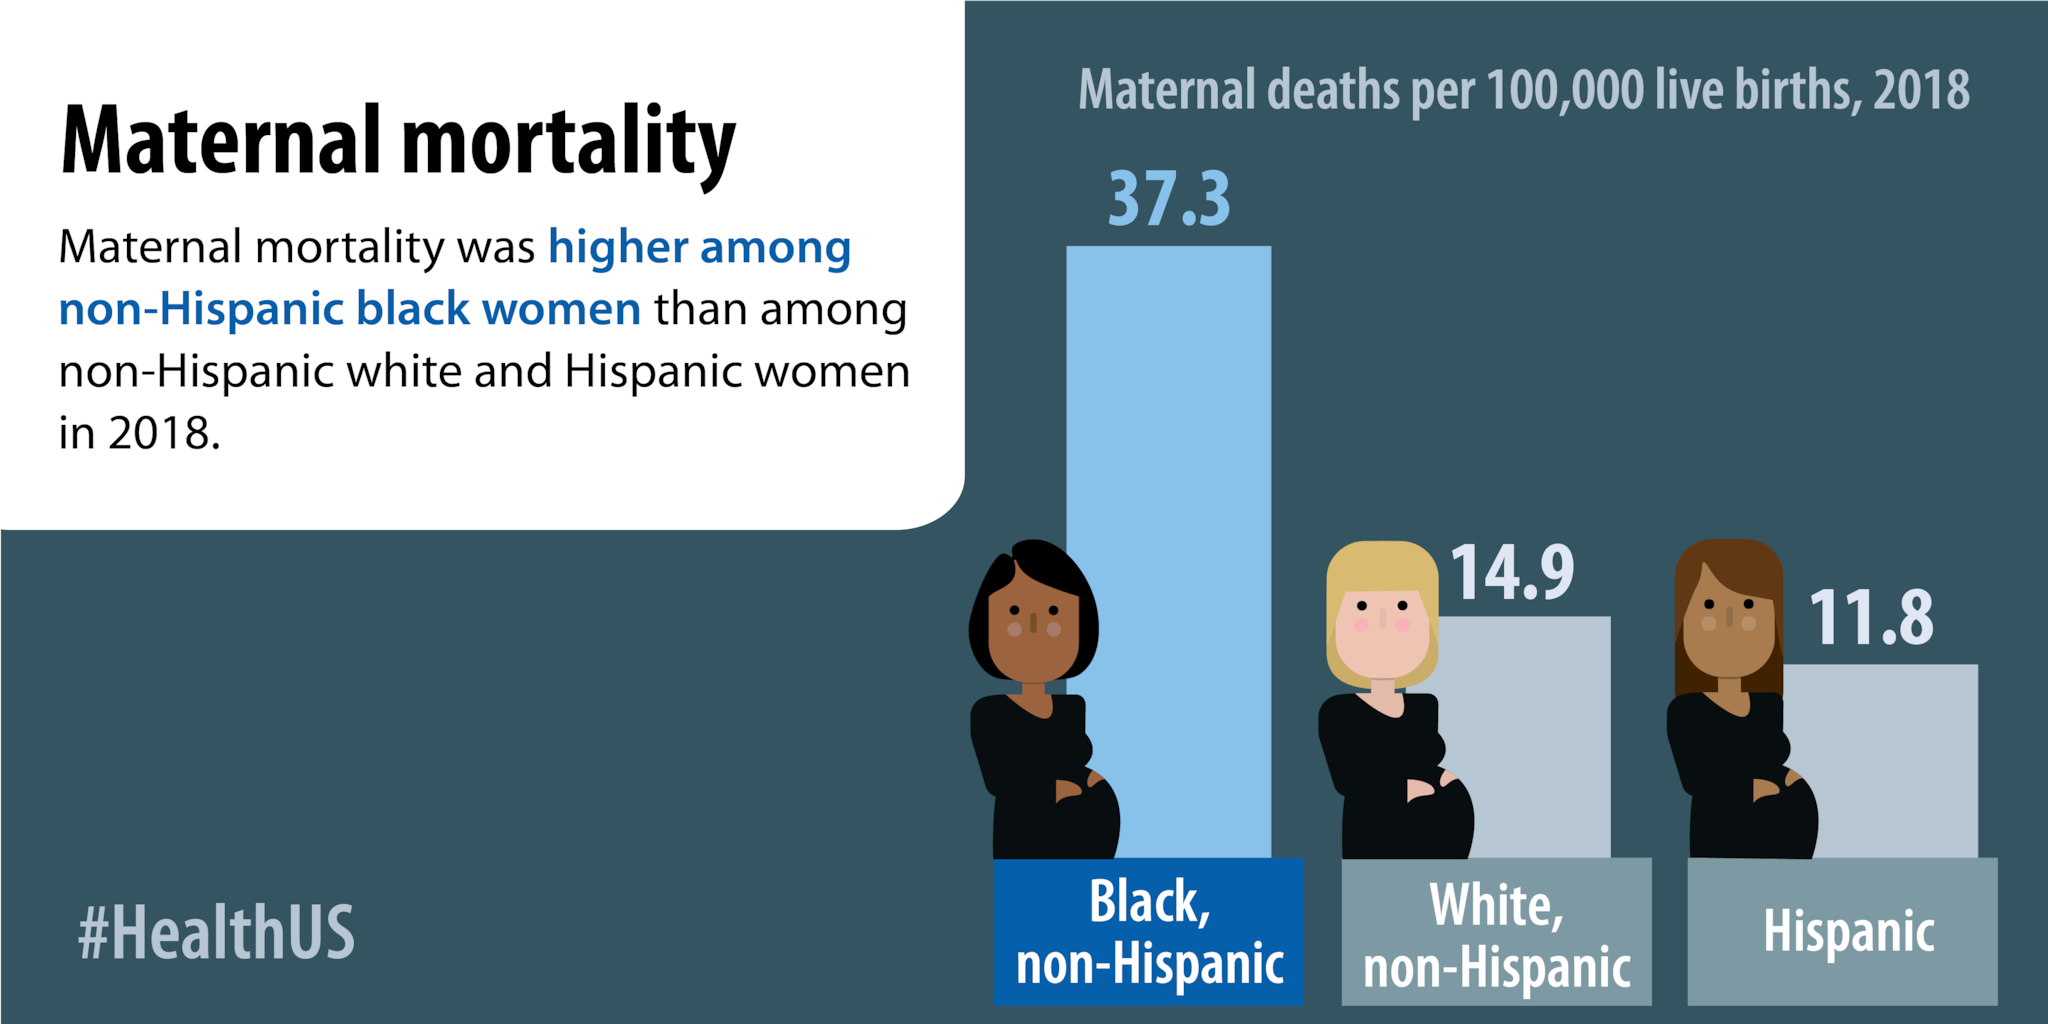 Maternal mortality was higher among non-Hispanic black women than among non-Hispanic white and Hispanic women in 2018.